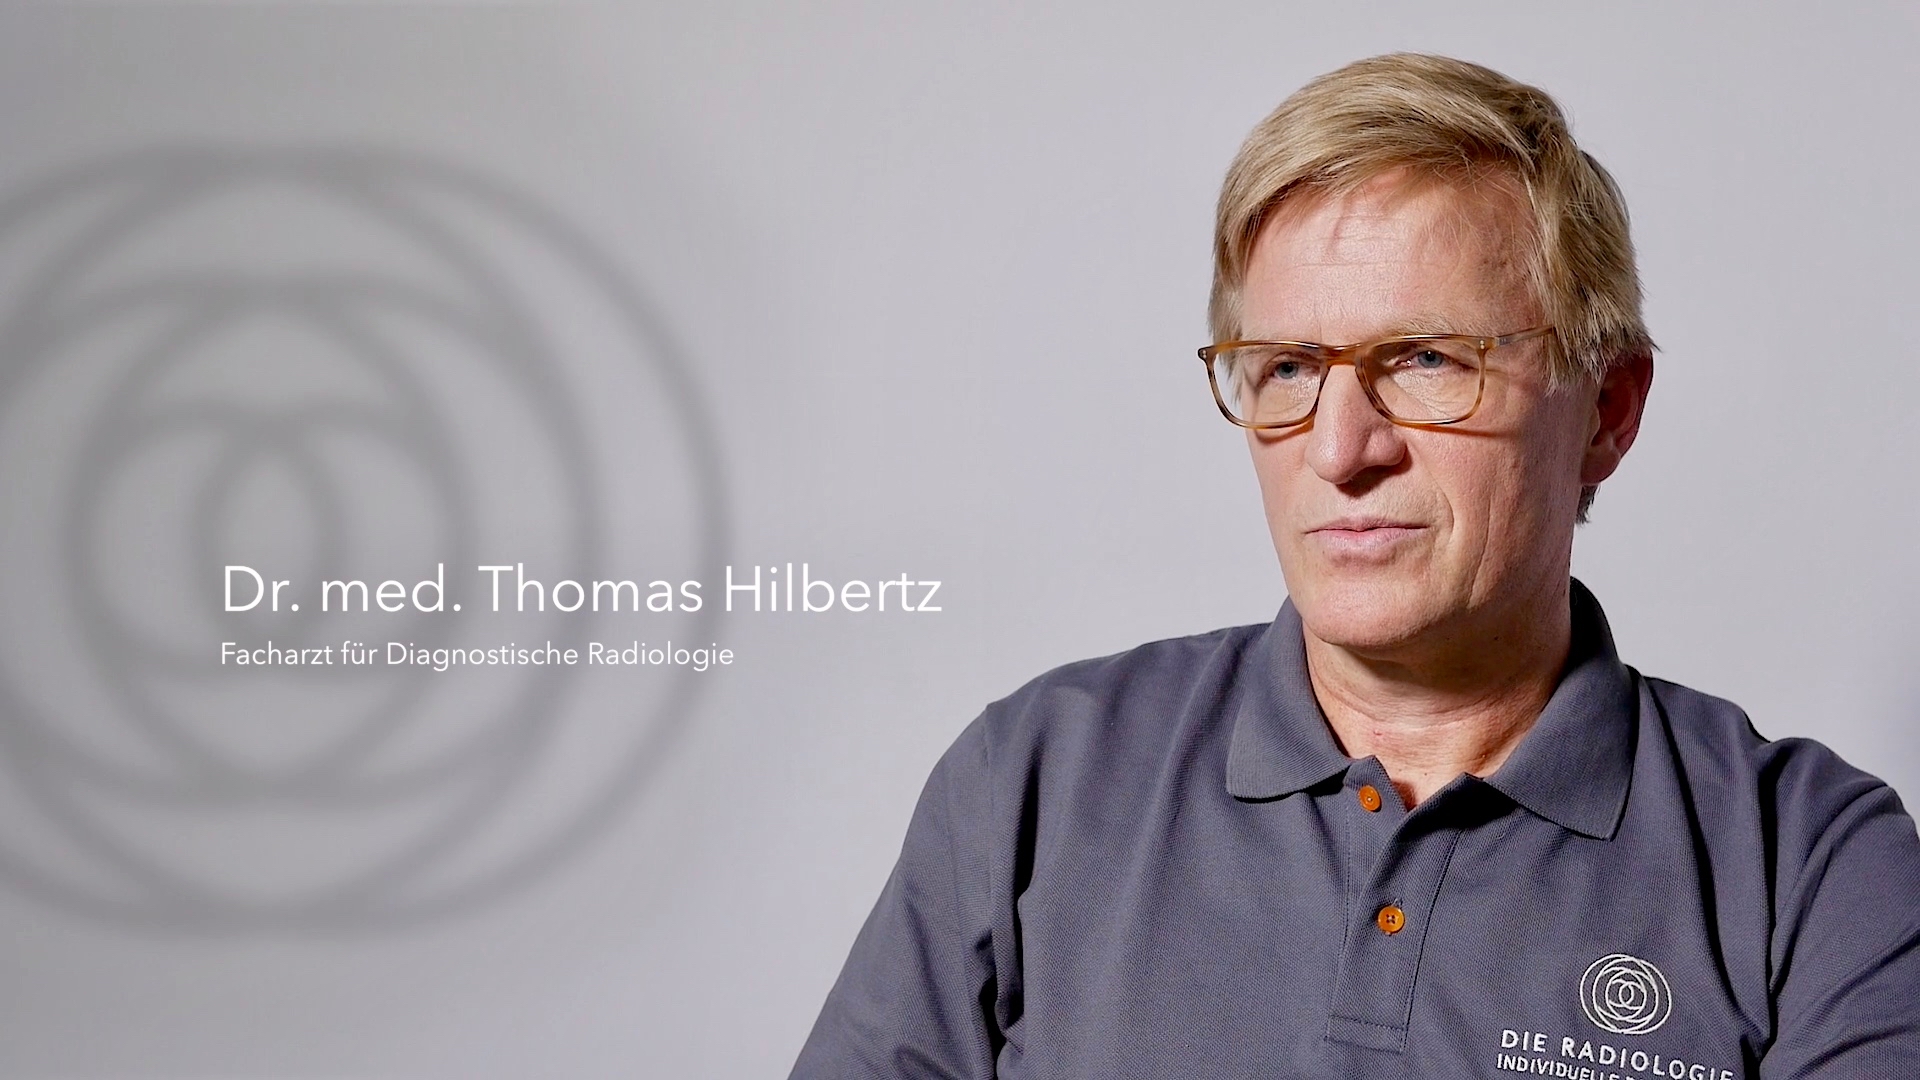 Dr. Hilbertz (MD), expert in breast diagnostics